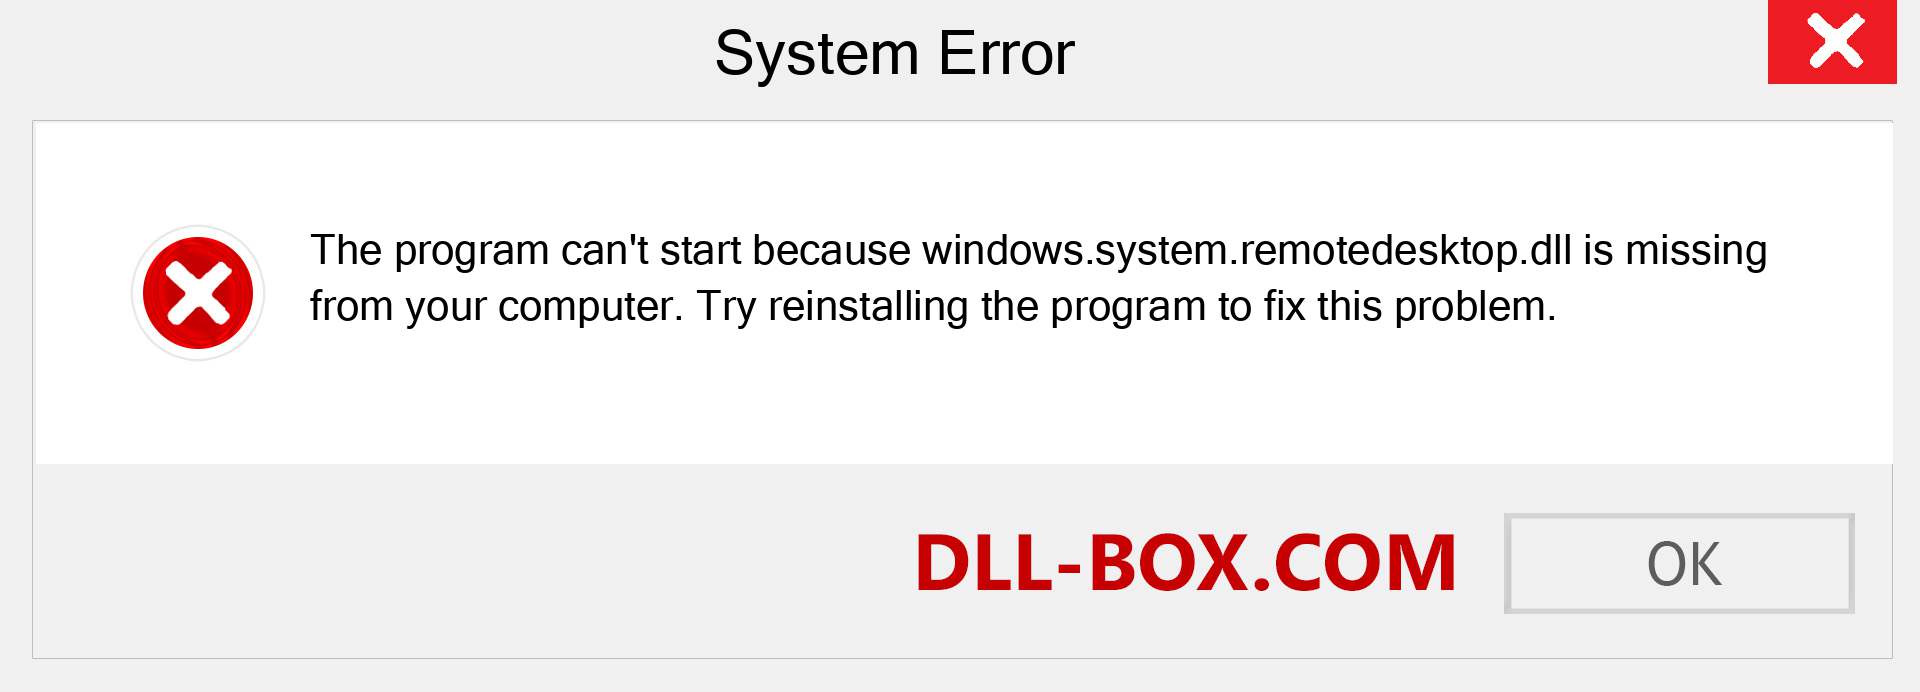  windows.system.remotedesktop.dll file is missing?. Download for Windows 7, 8, 10 - Fix  windows.system.remotedesktop dll Missing Error on Windows, photos, images